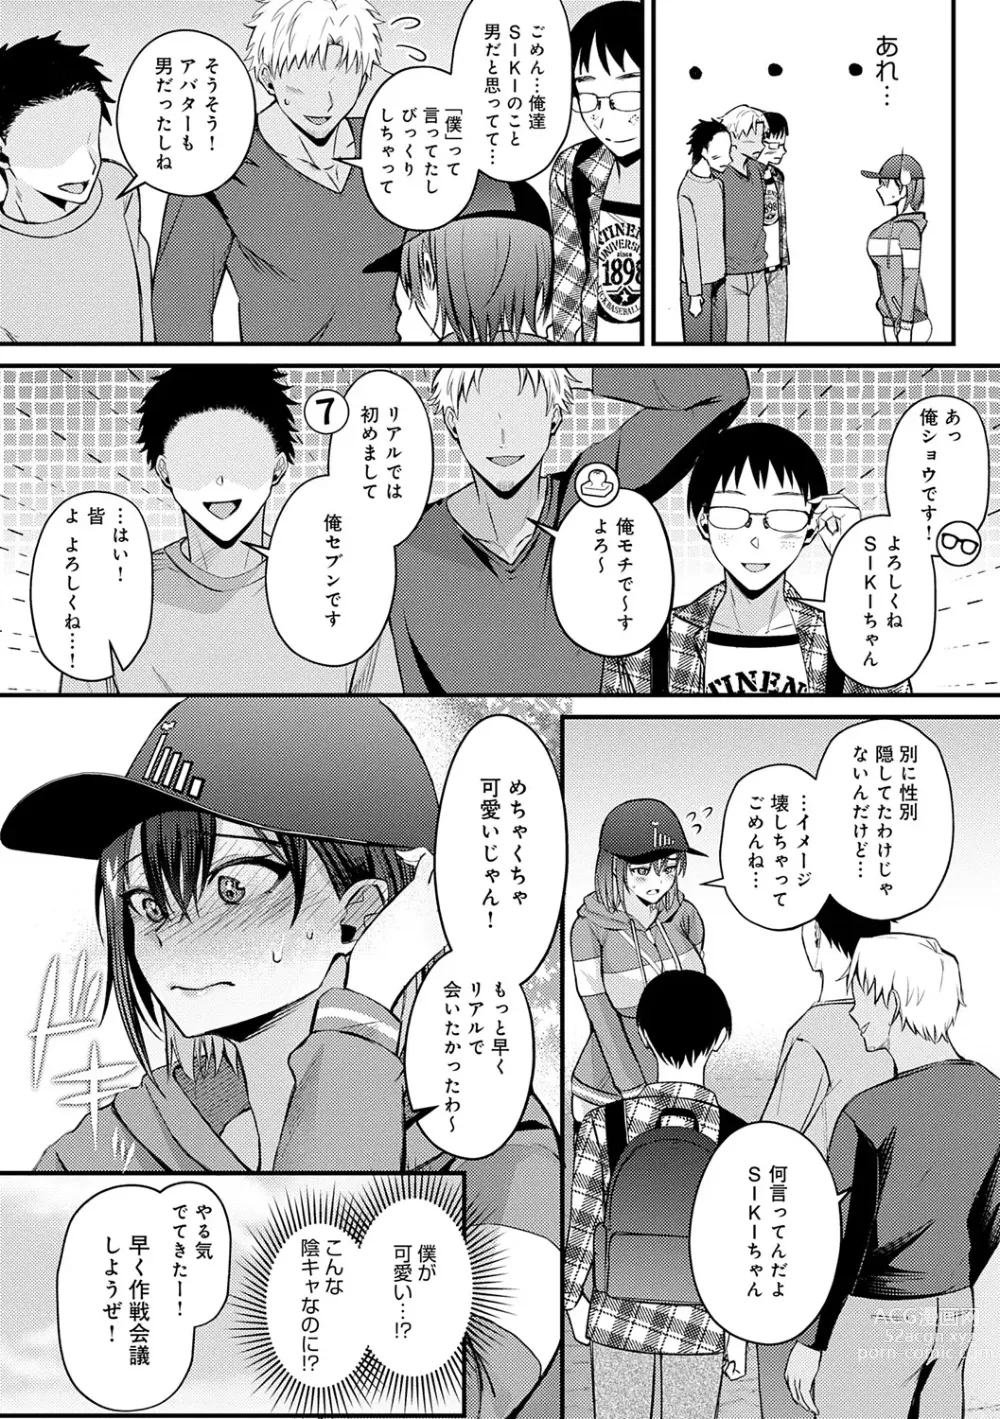 Page 7 of manga Hajimete Otoshi